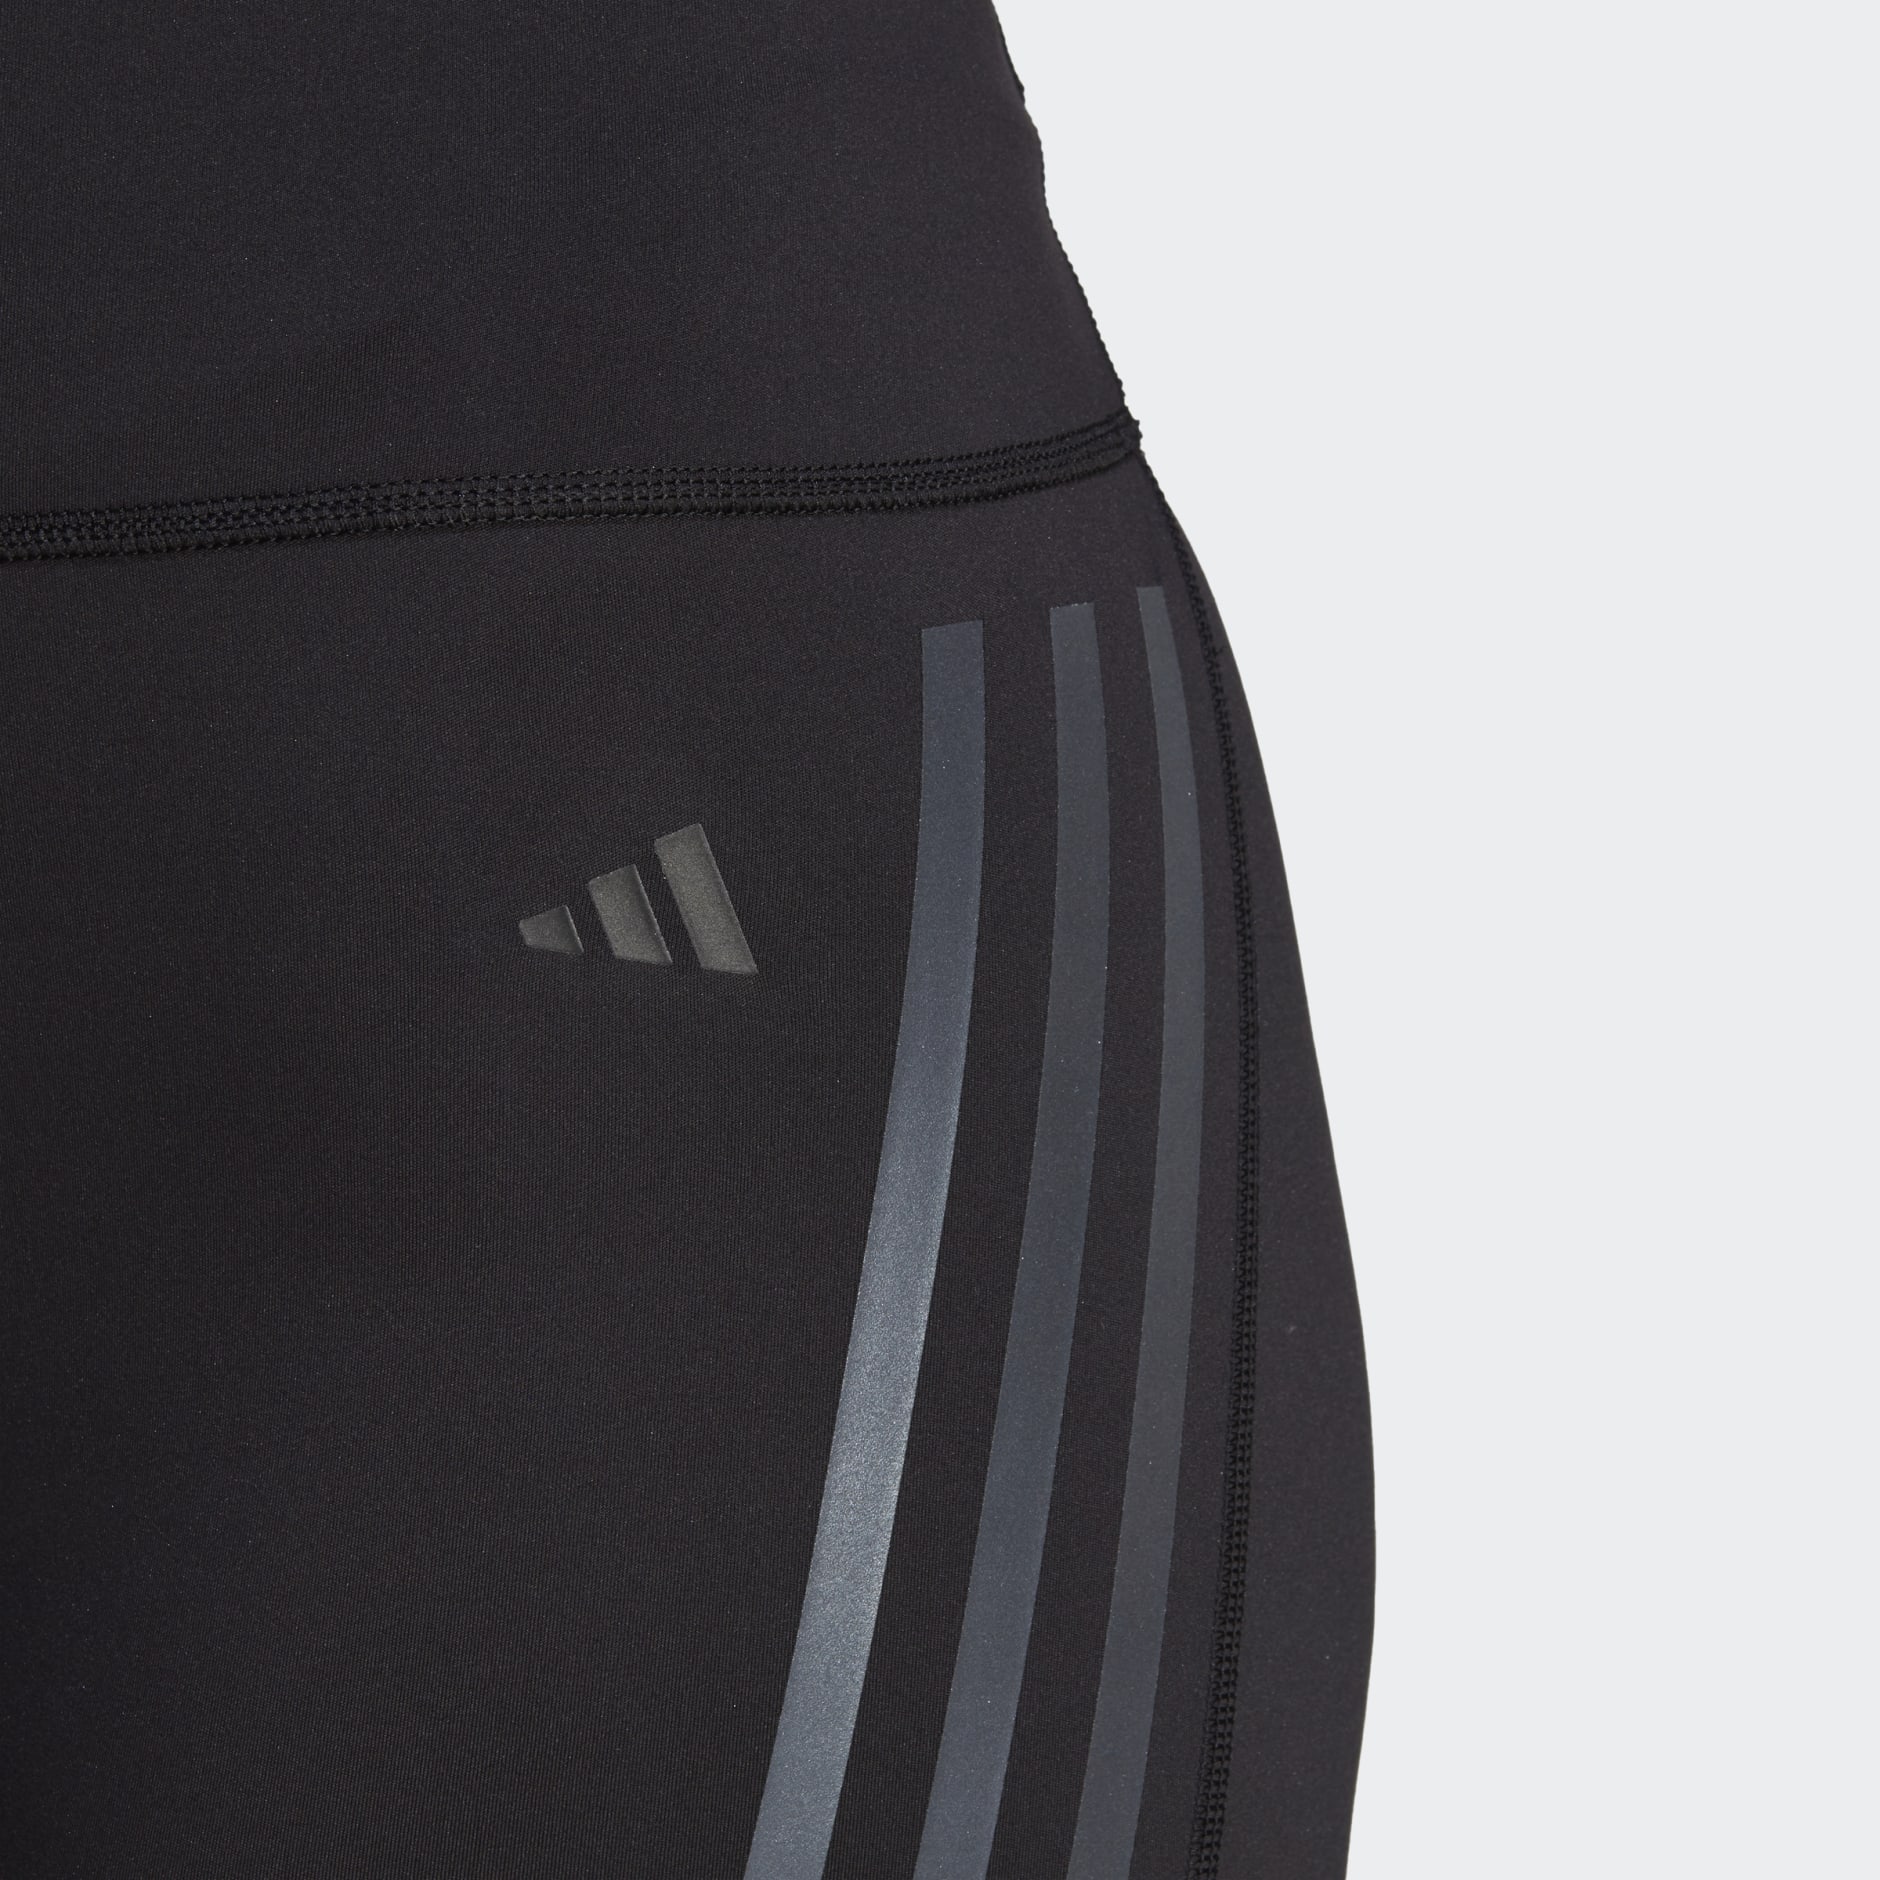 Clothing - DailyRun 3-Stripes Five-Inch Short Leggings - Black | adidas ...